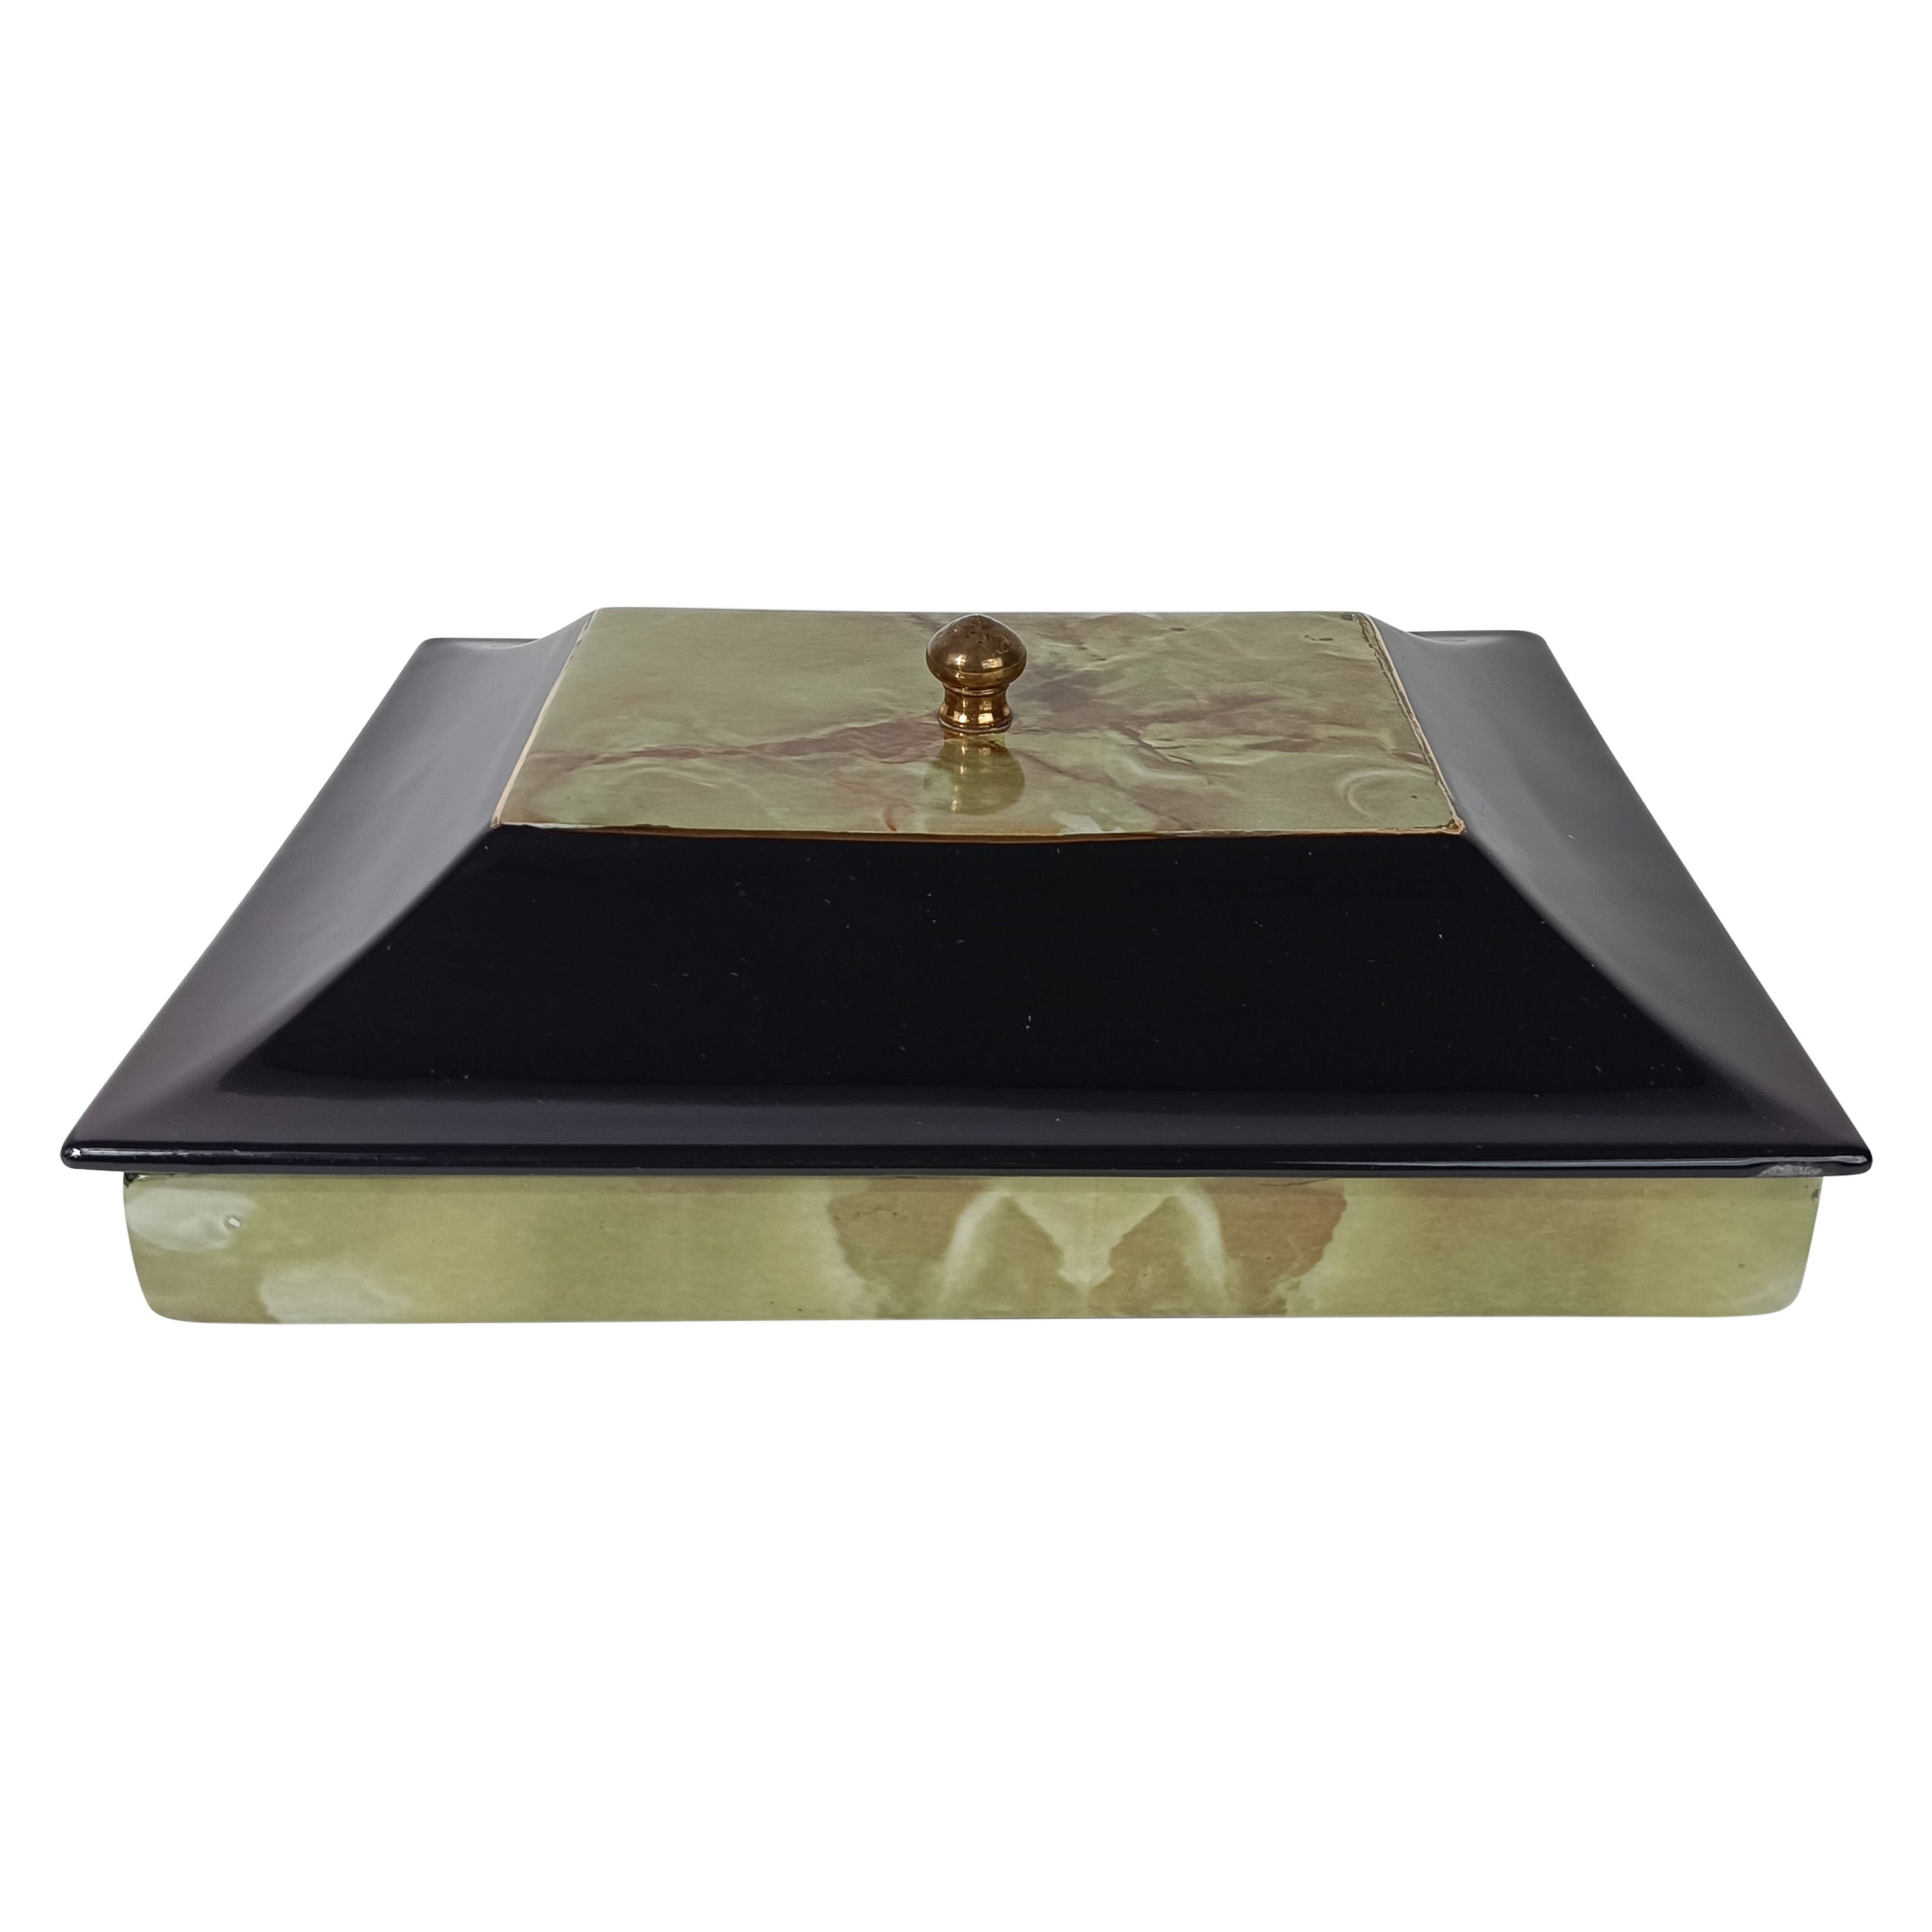  Italian Mid Century Modern Box by Tommaso Barbi in glazed ceramic in faux onyx  For Sale